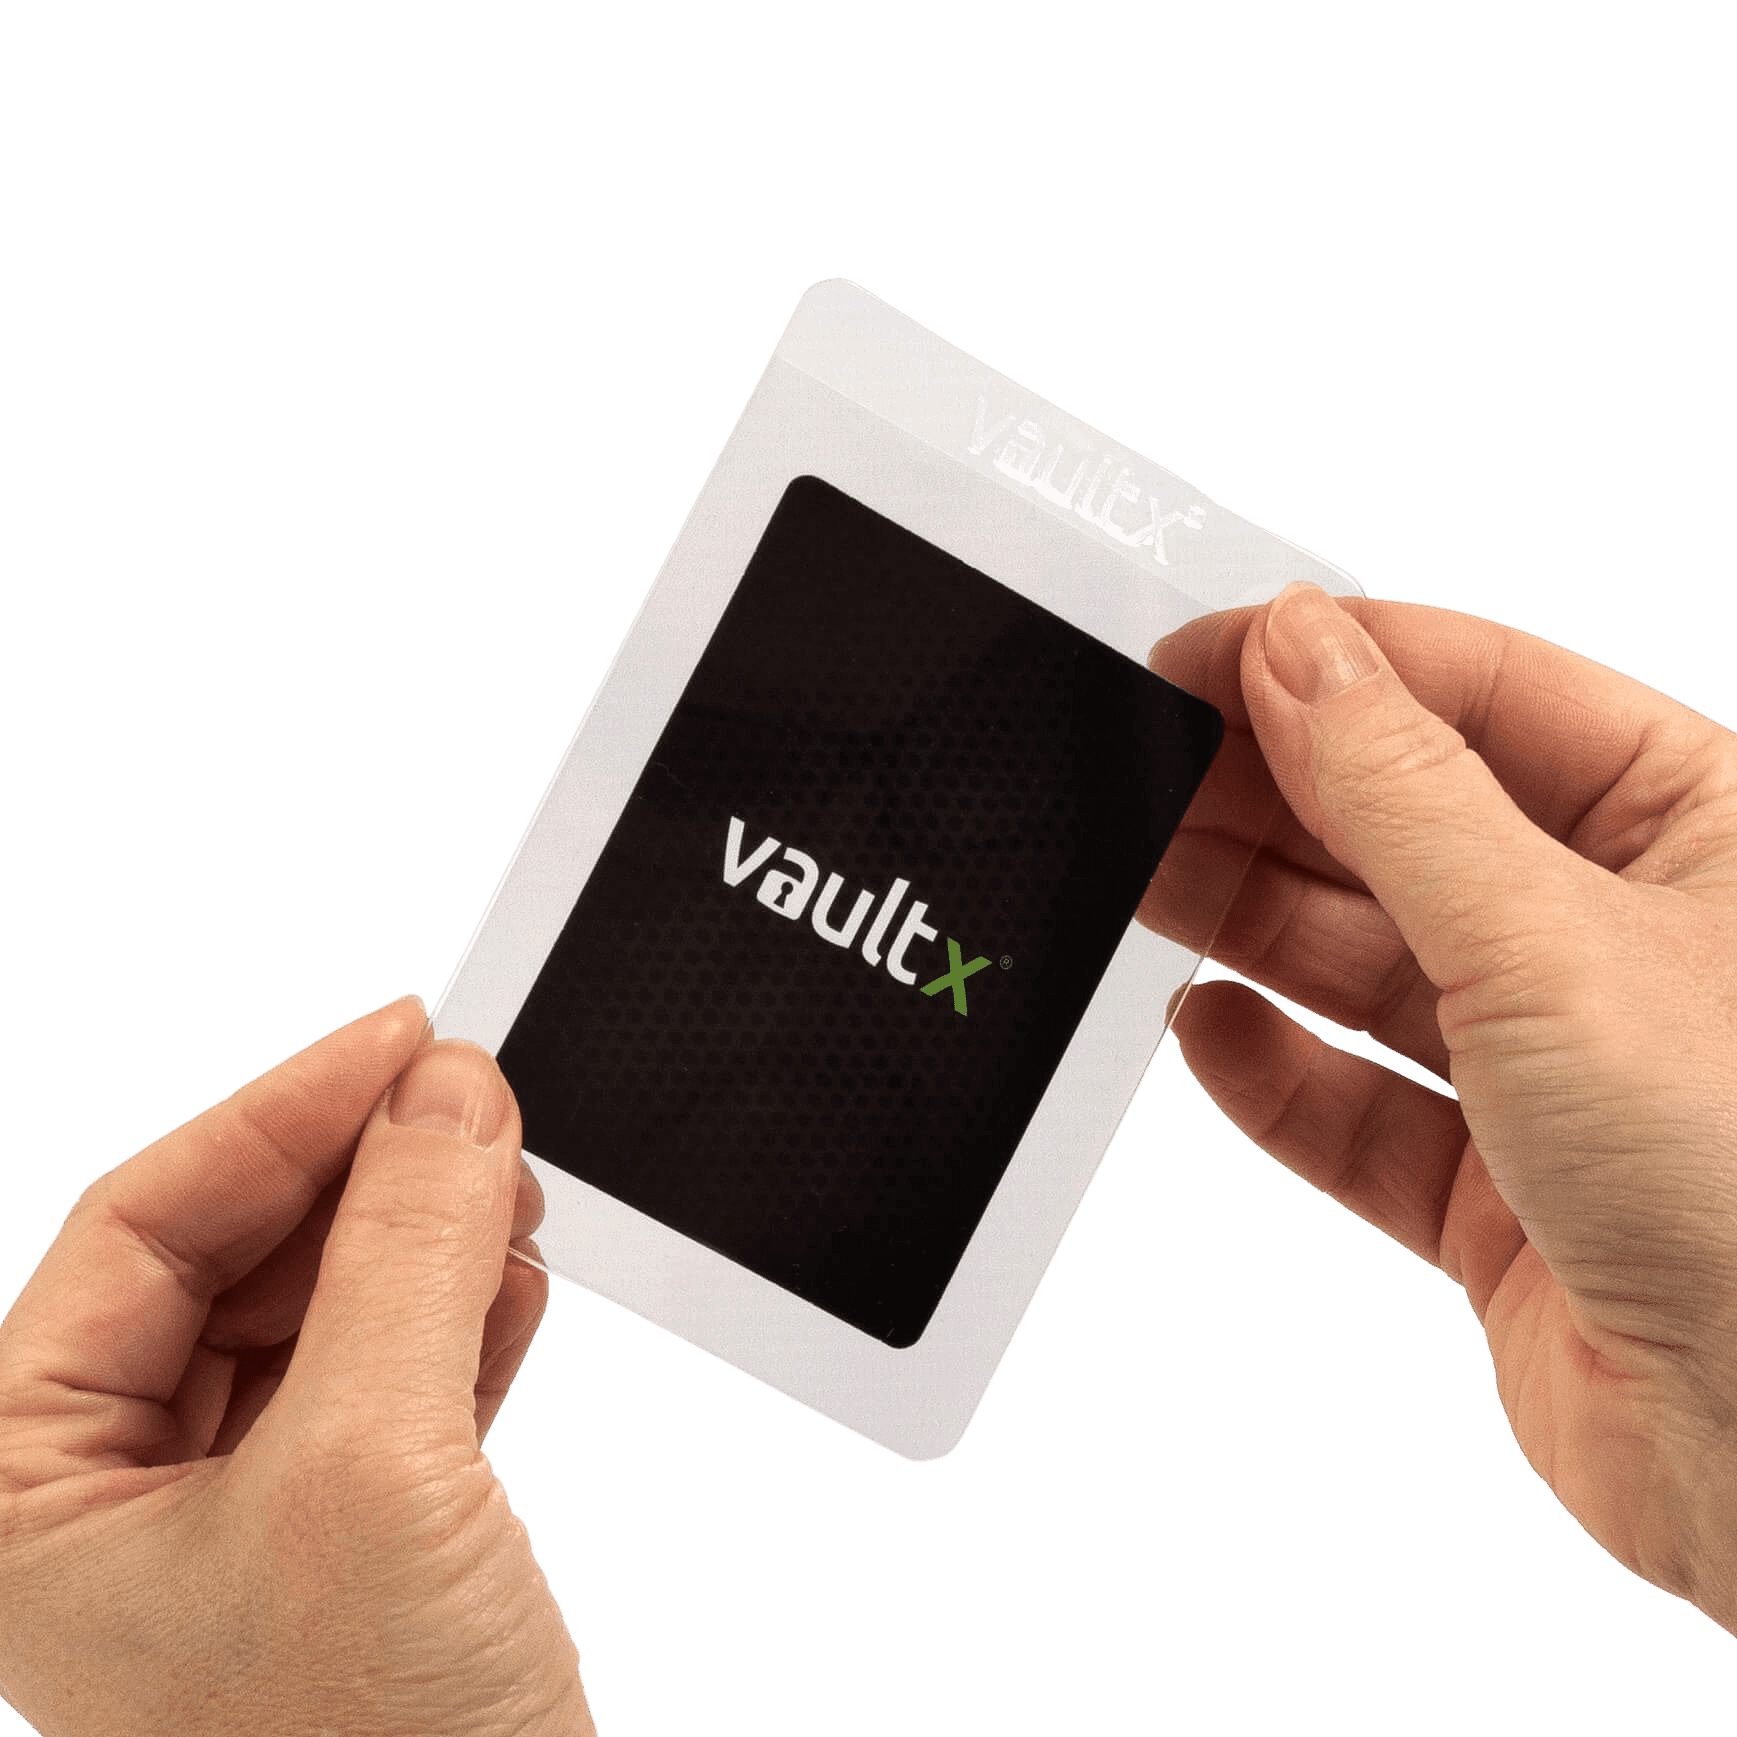 Vault X Semi-Rigid Card Holders (50 Pack) - The Card Vault